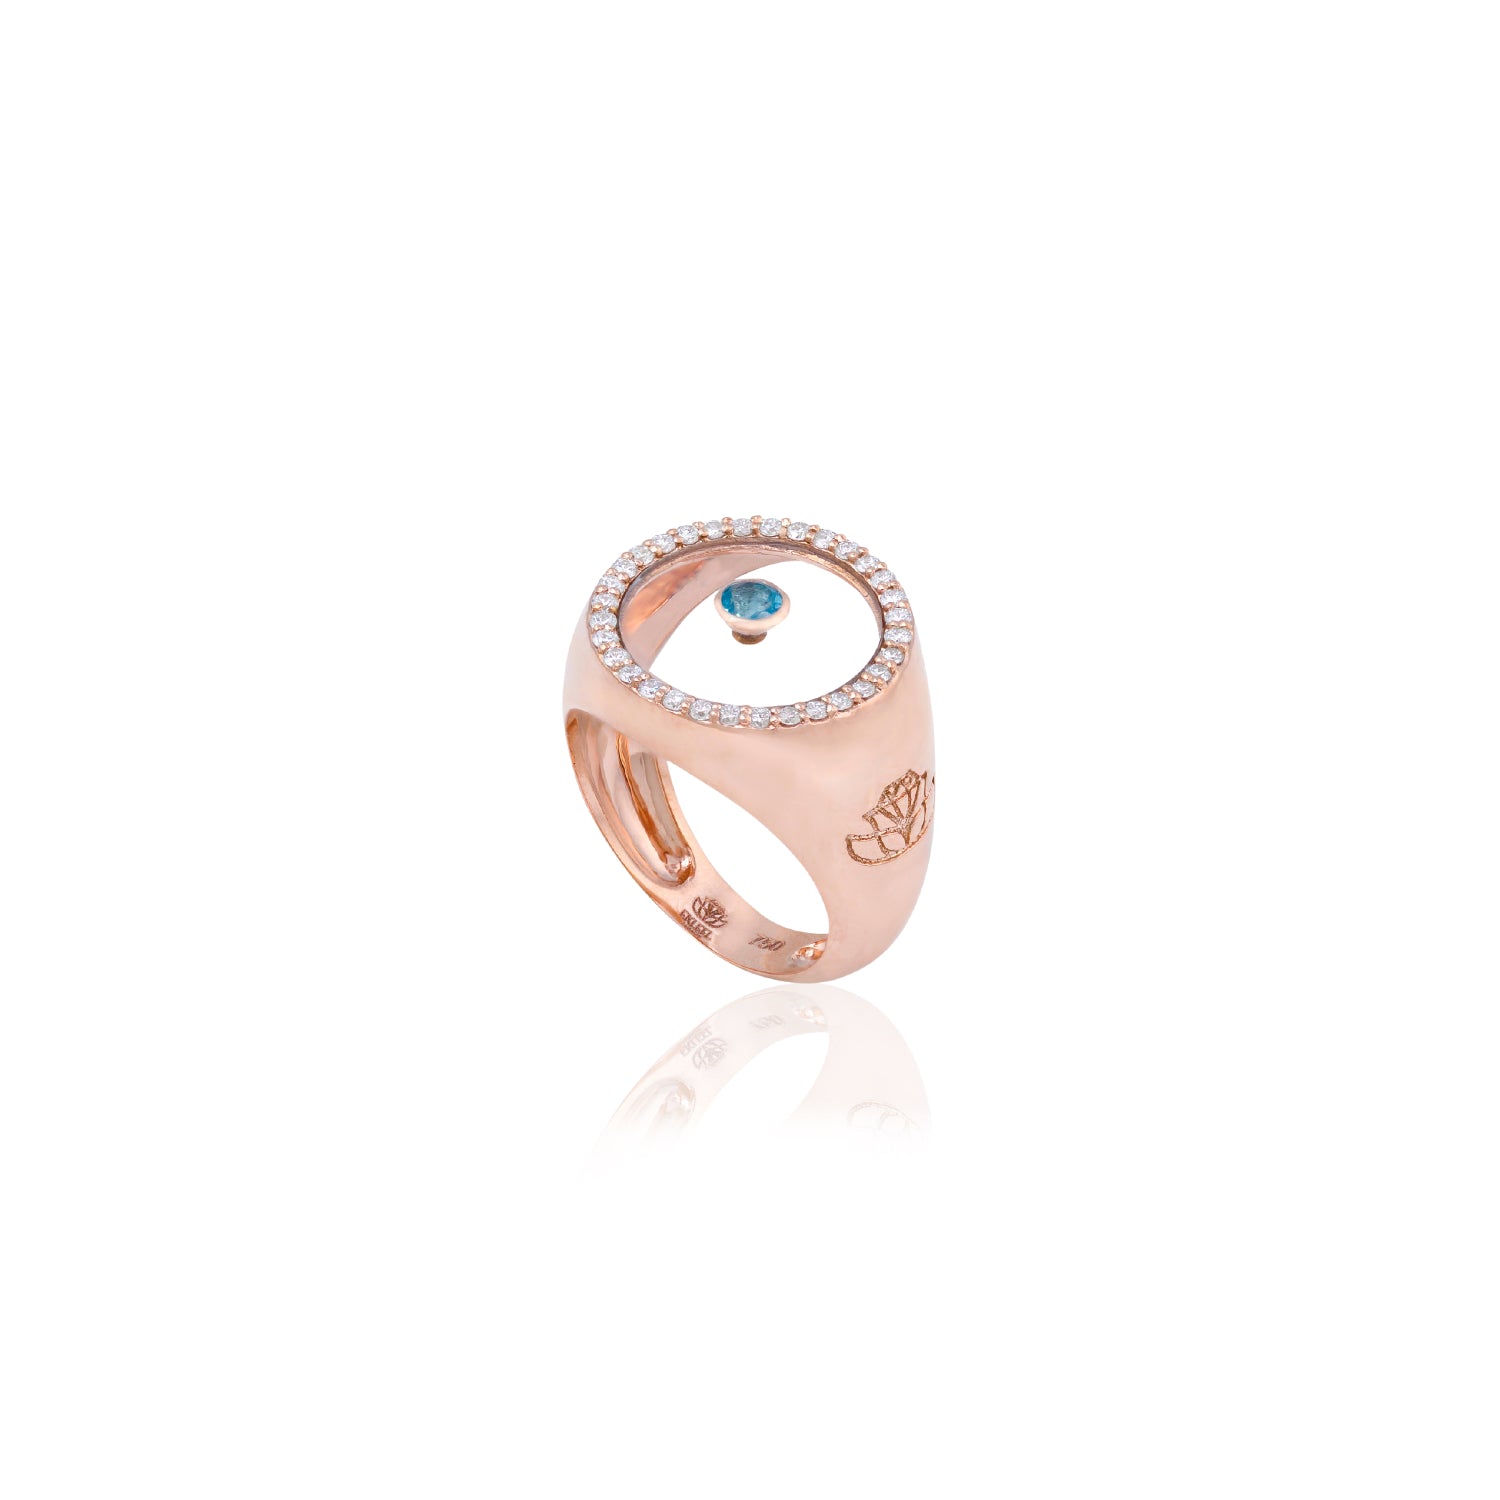 Blue Topaz December Birthstone Ring in Rose Gold